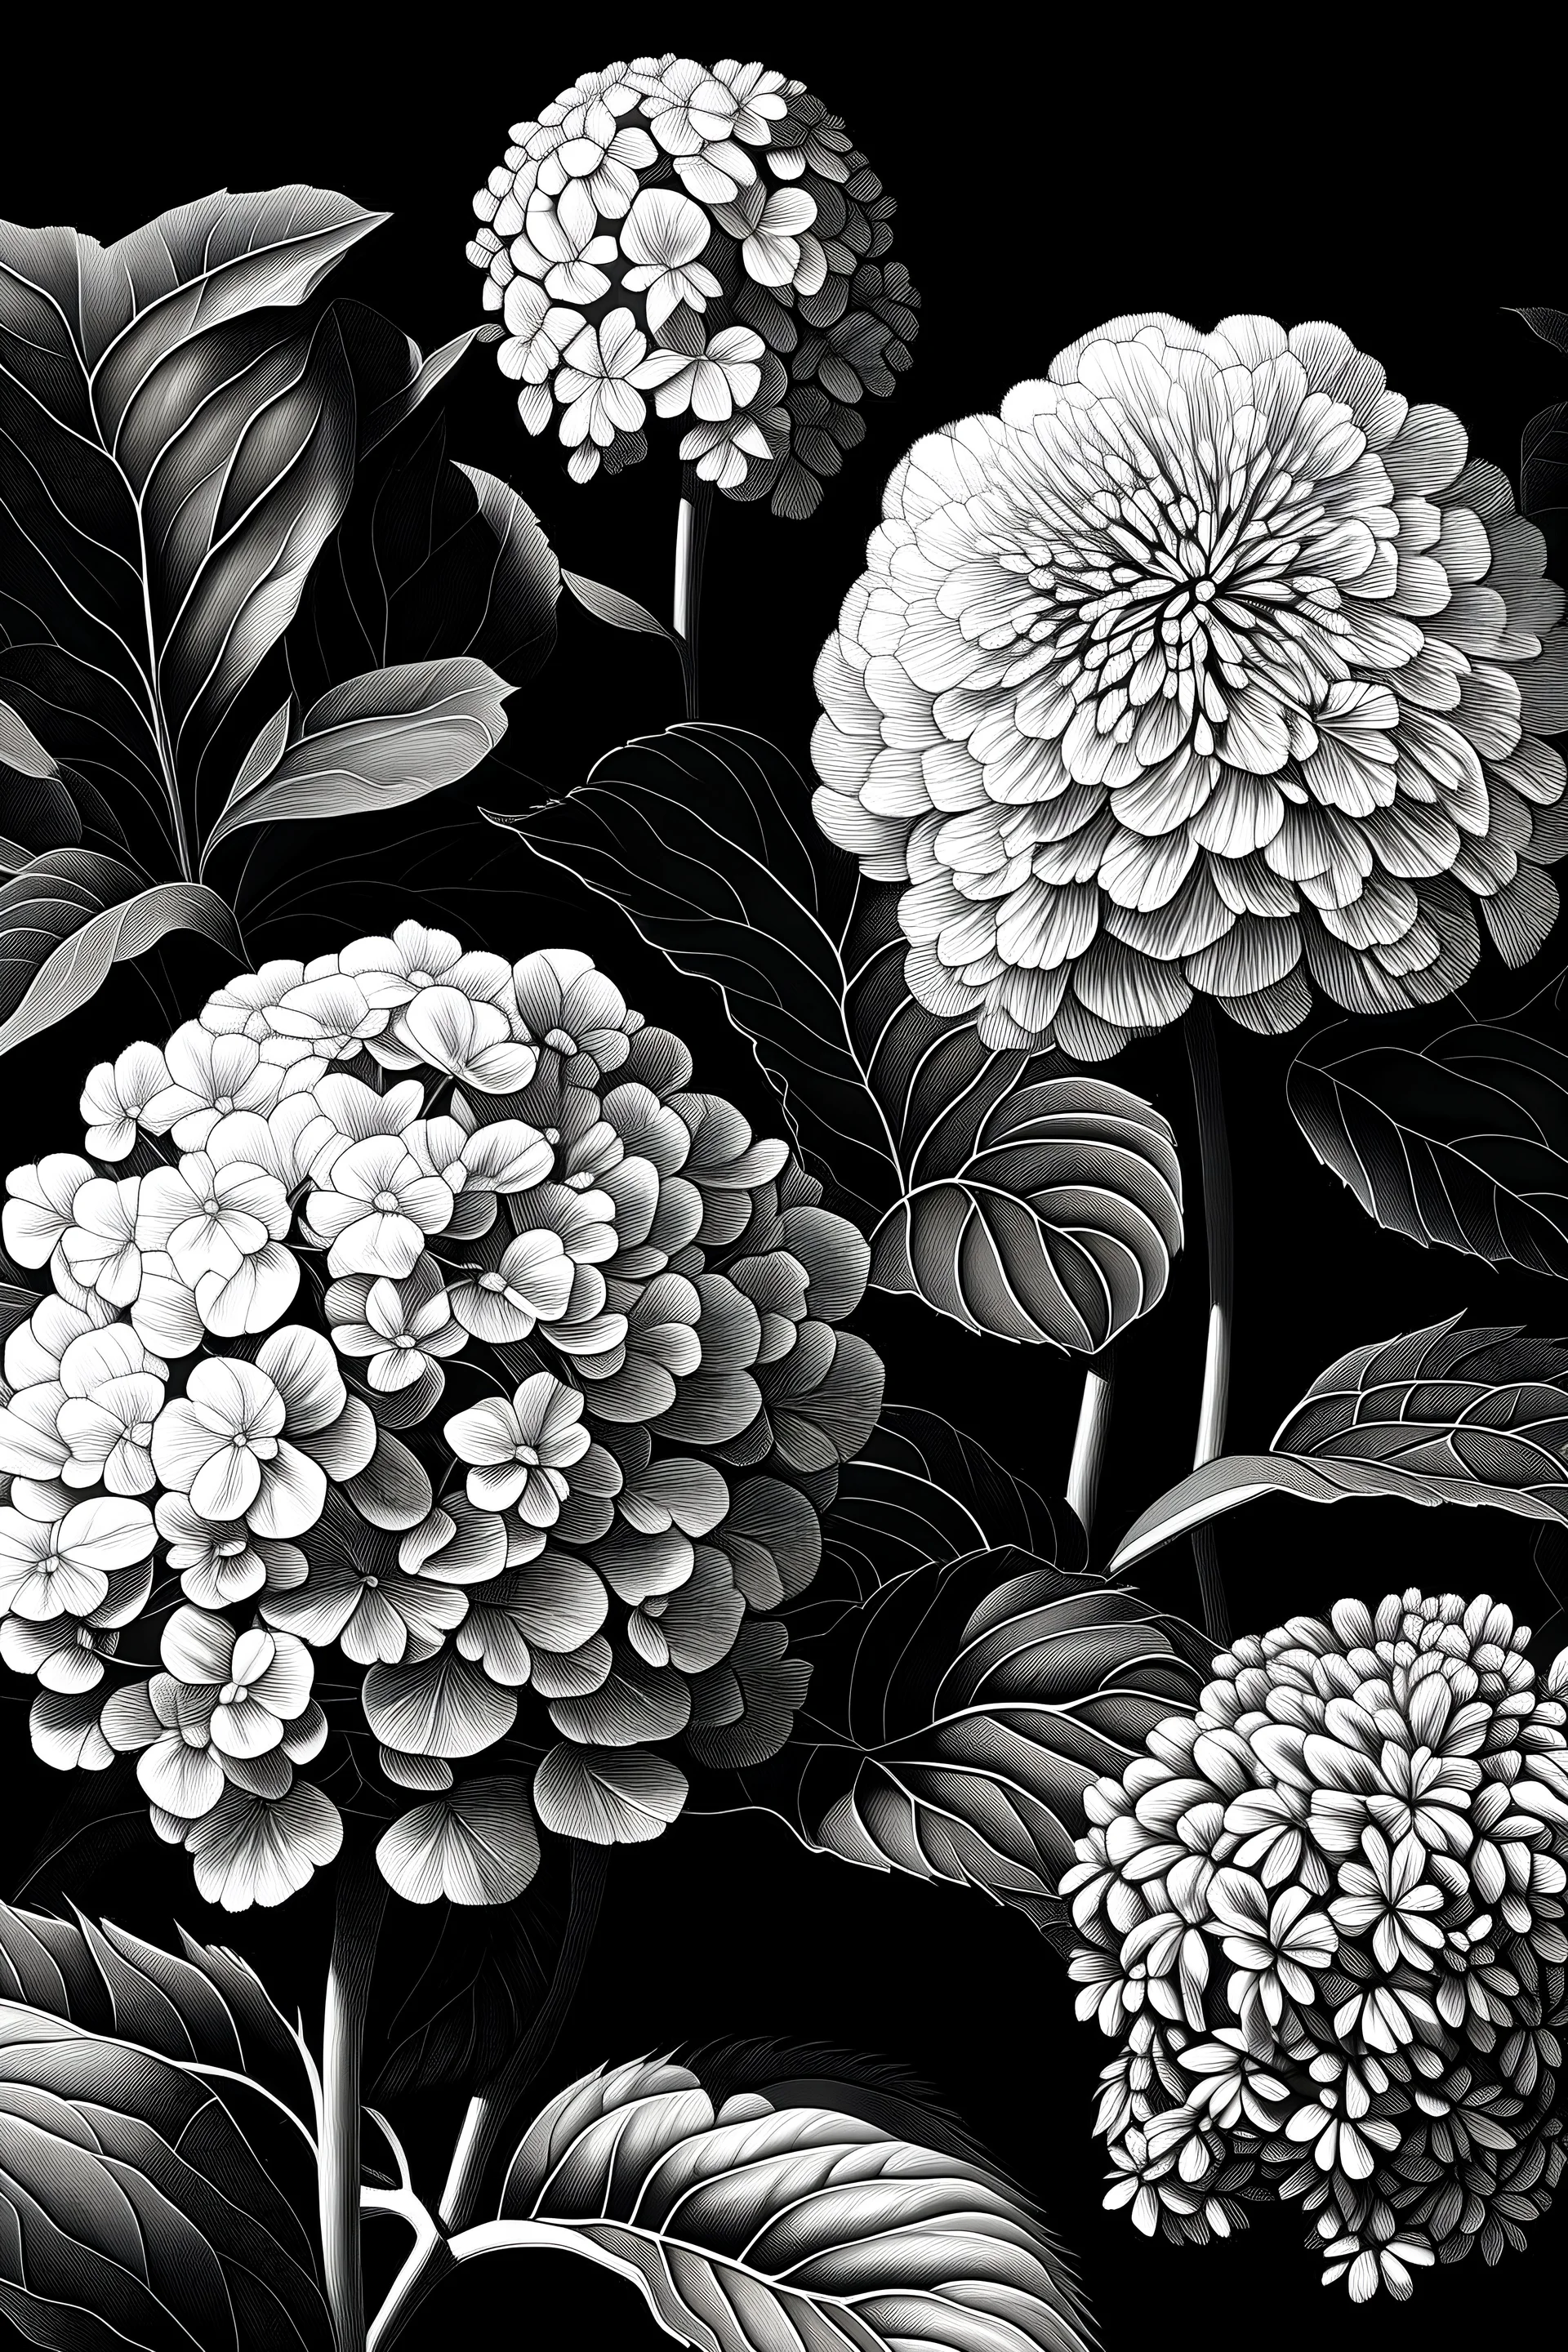 Hydrangea garden drawing black and white